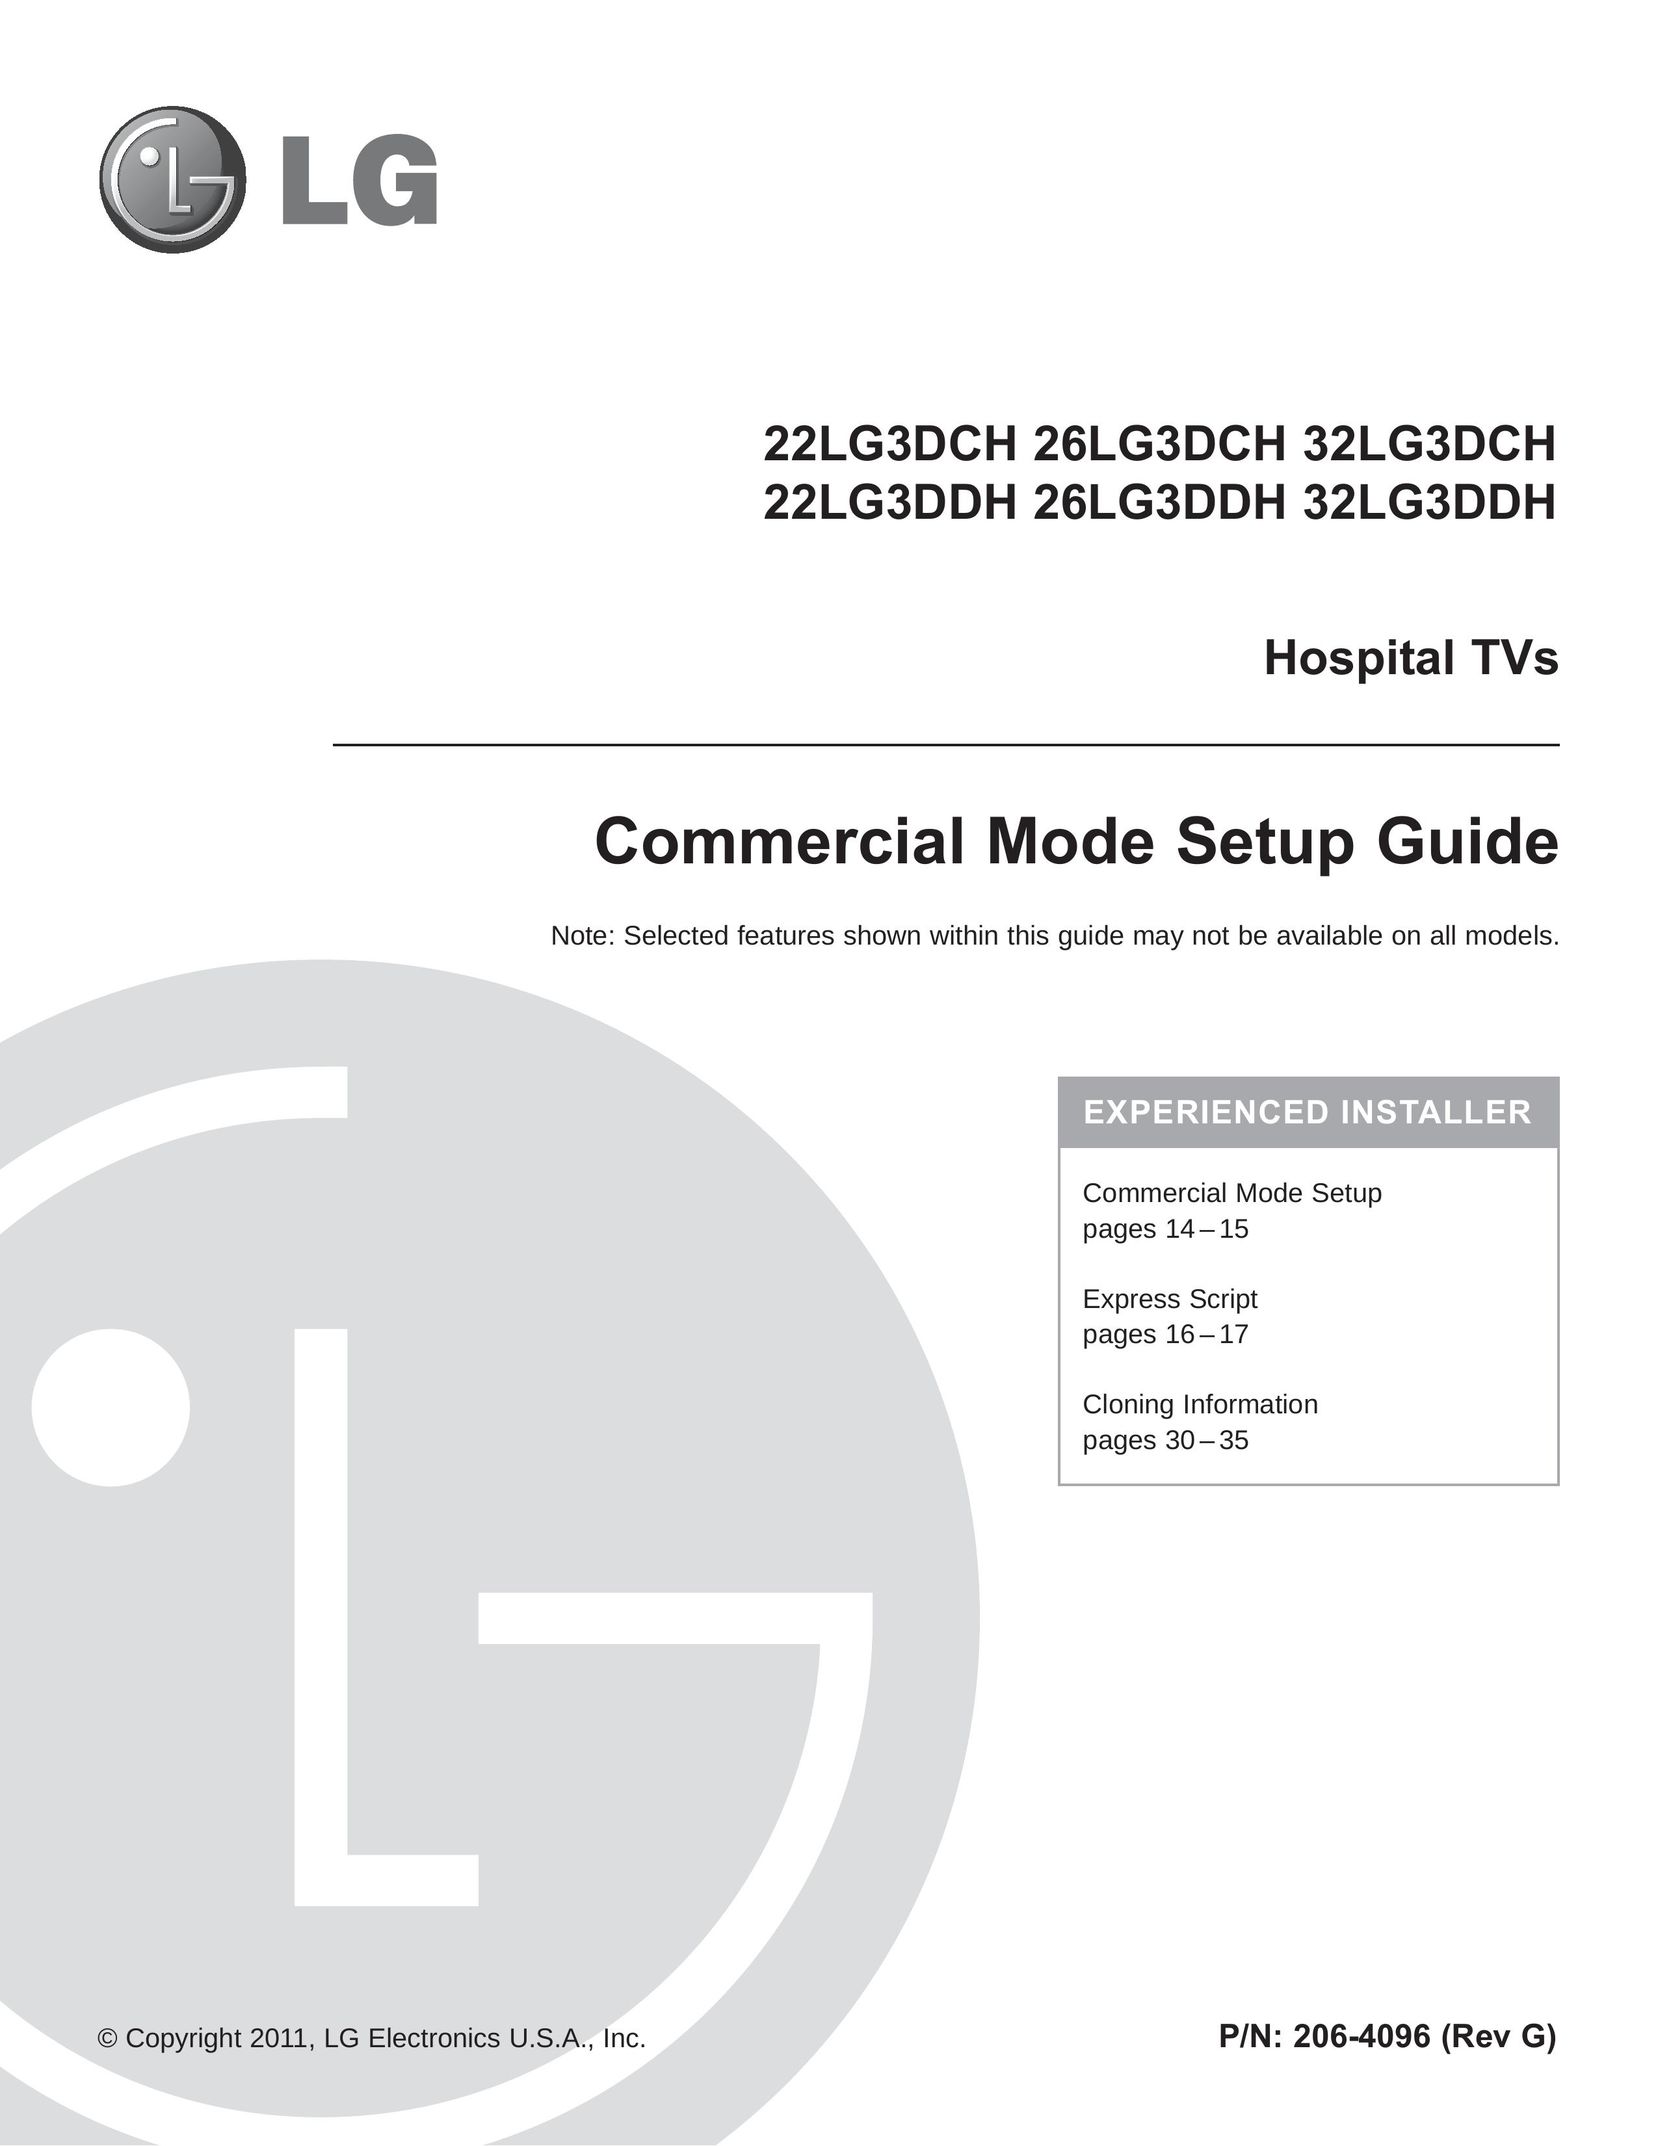 LG Electronics 32LG3DDH CRT Television User Manual